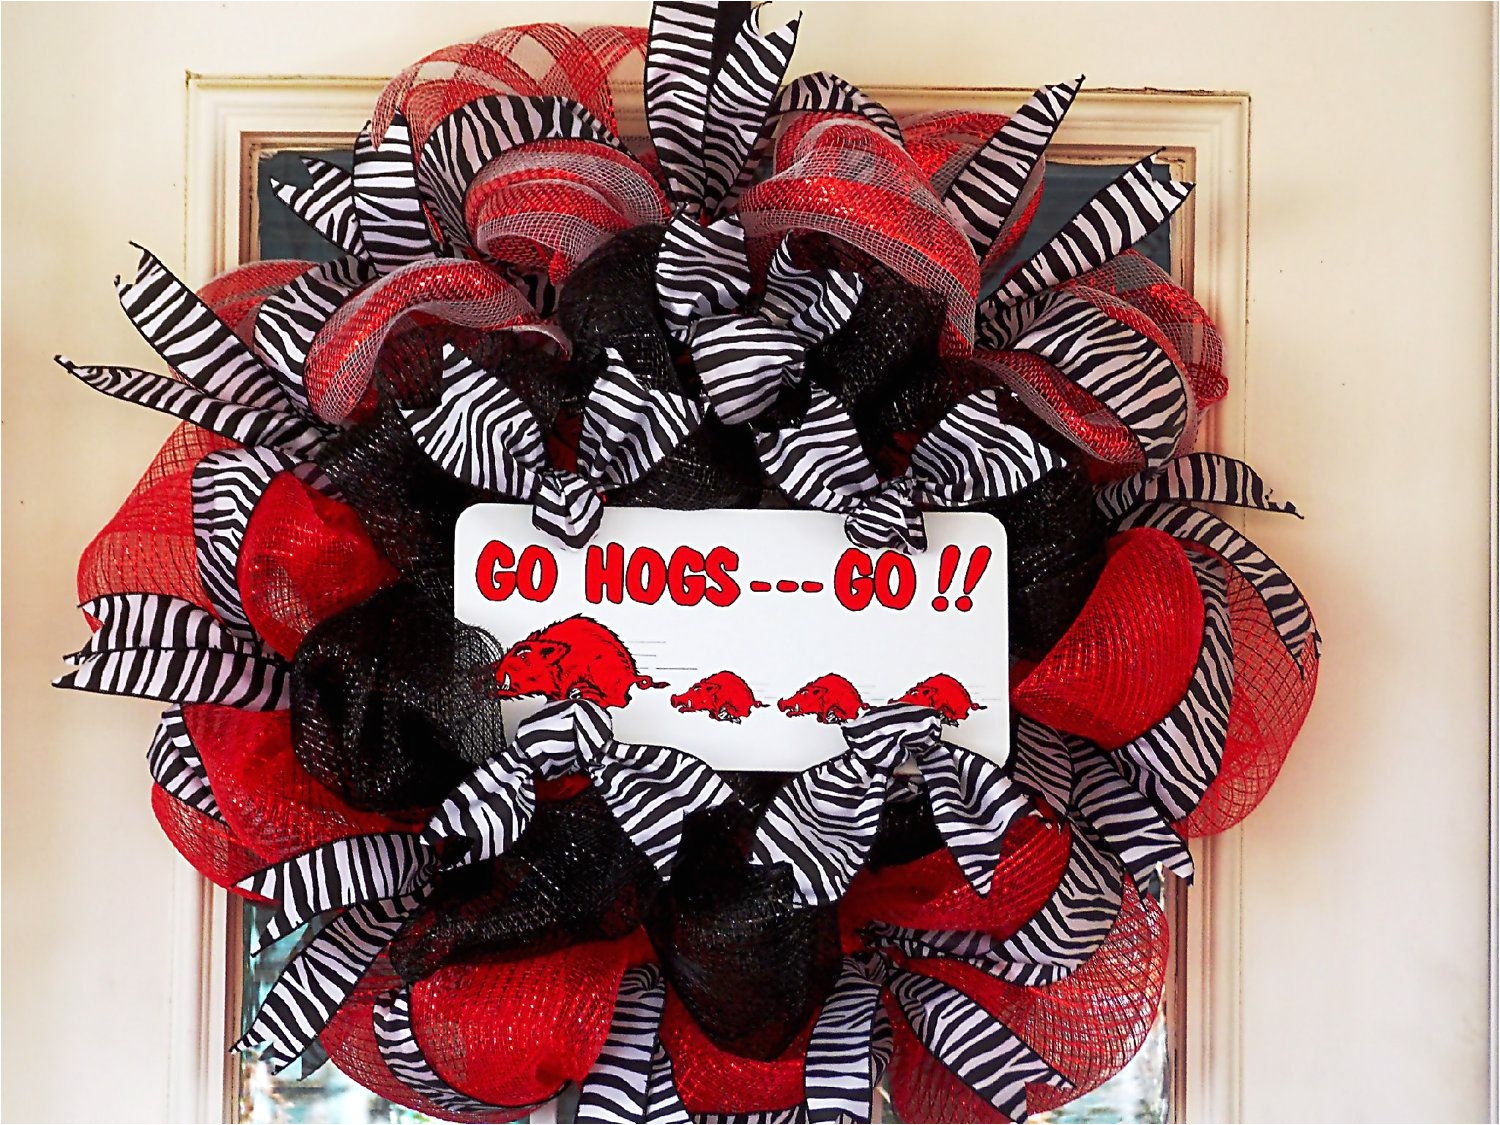 arkansas razorback wreath made with deco mesh zebra ribbon go hogs go 52 00 via etsy